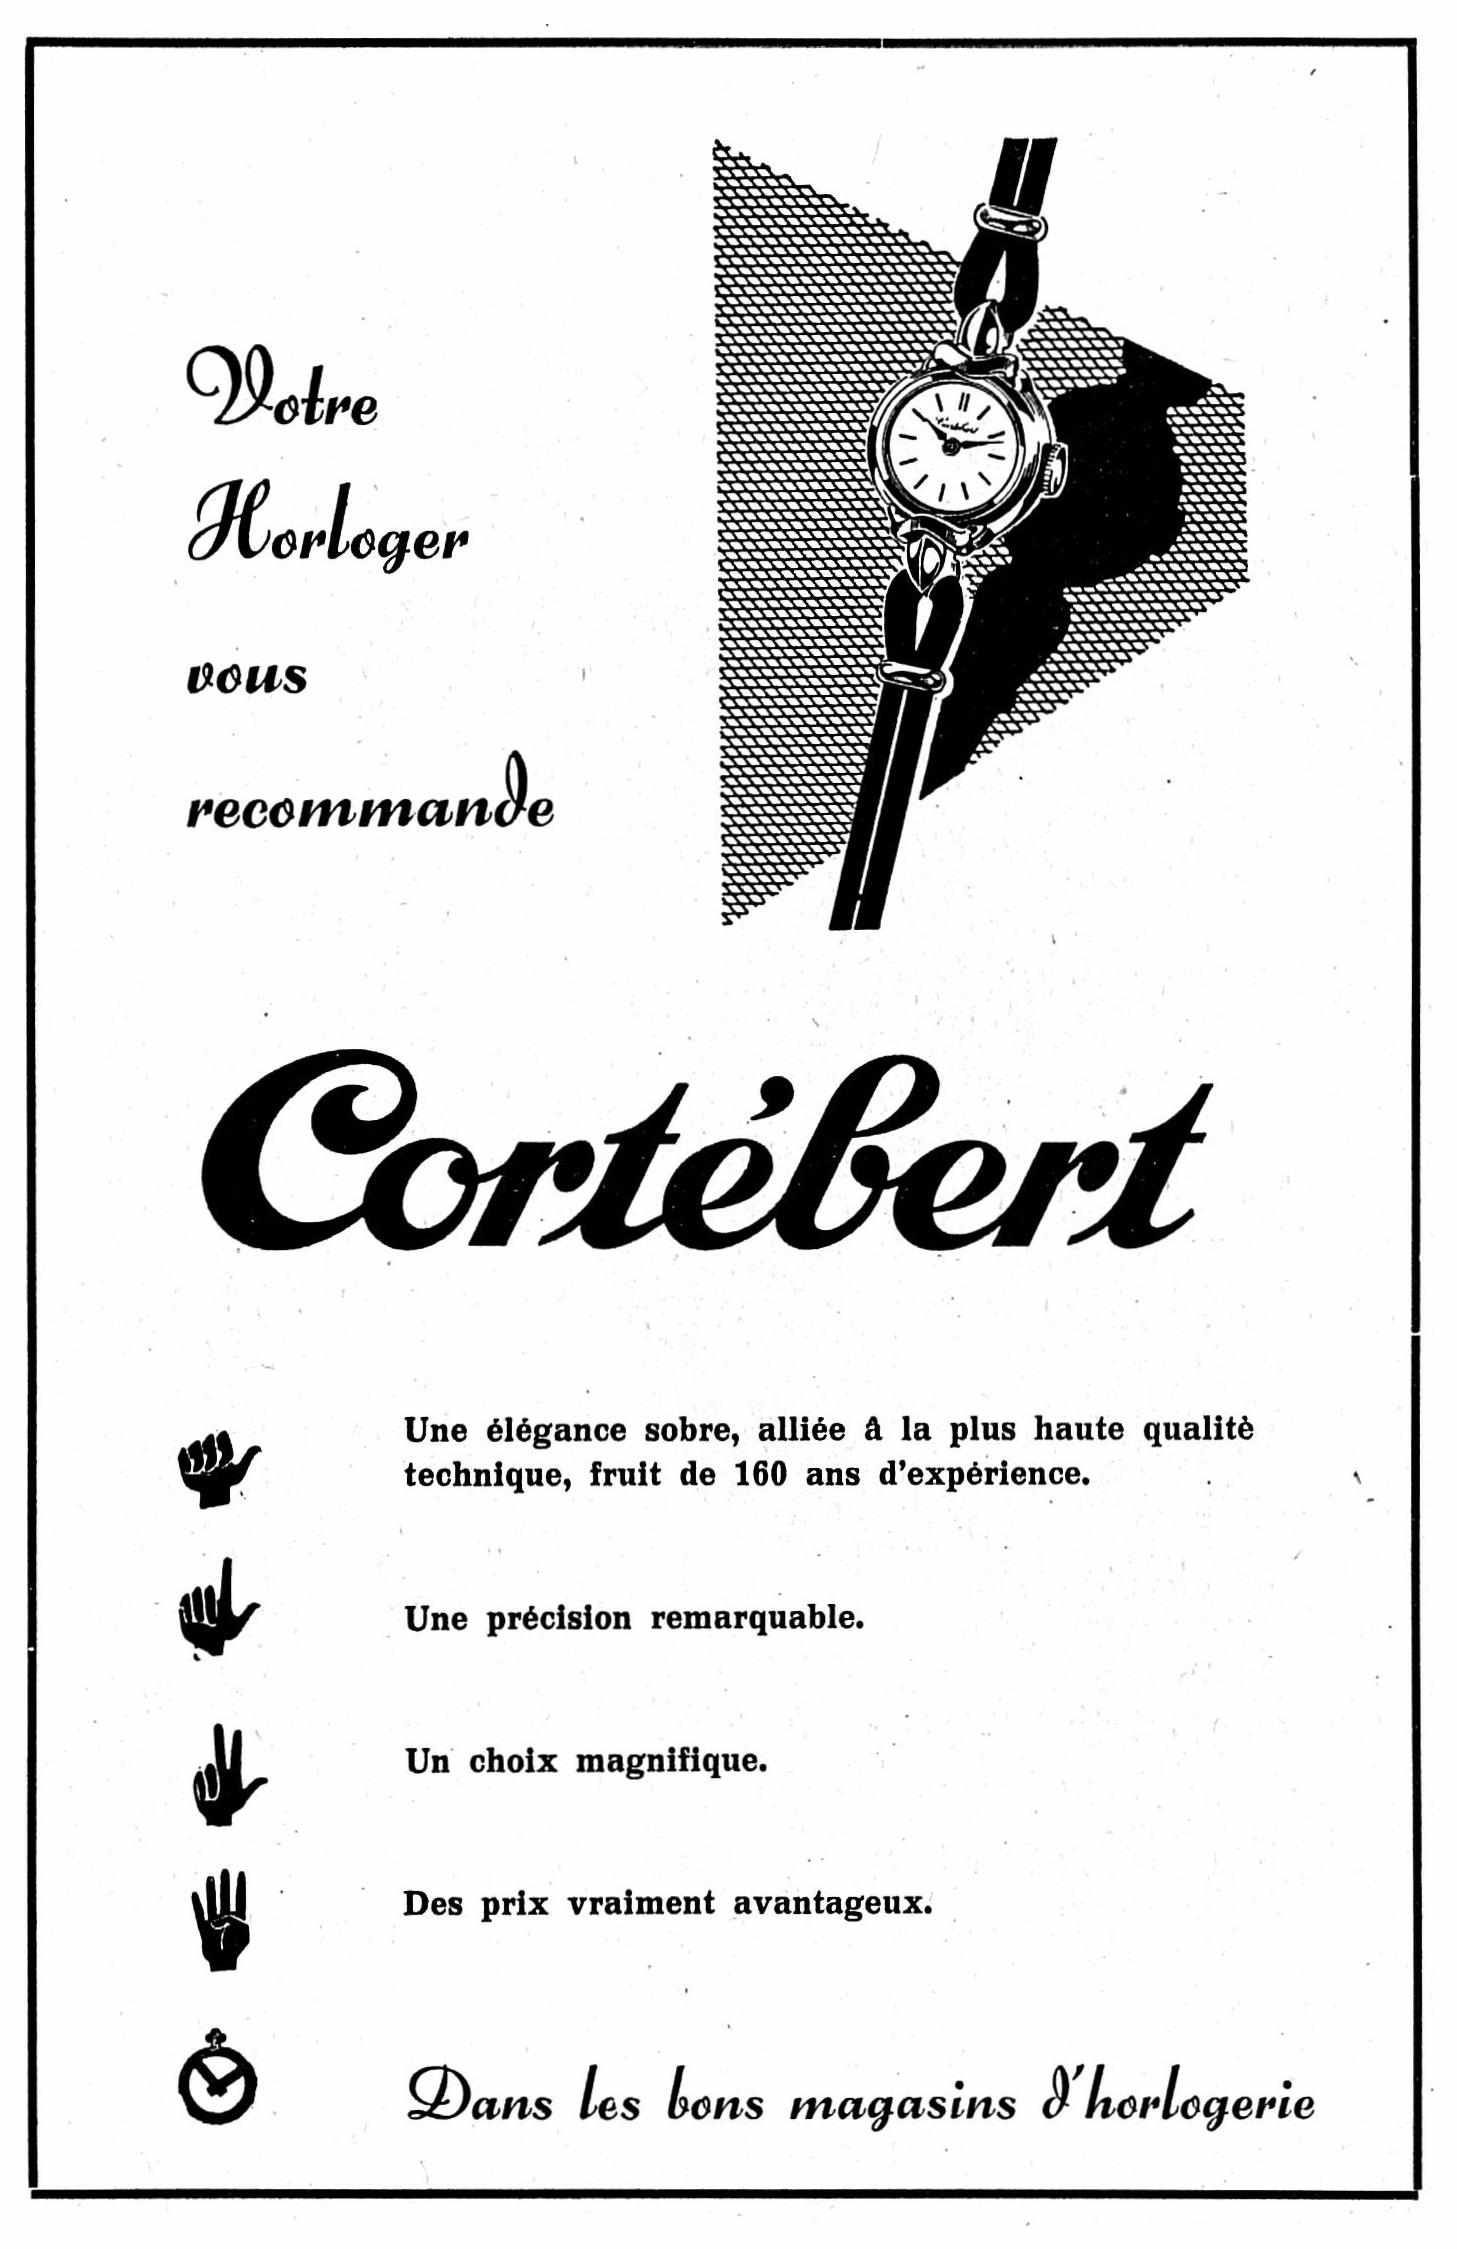 Cortebert 1956 164.jpg